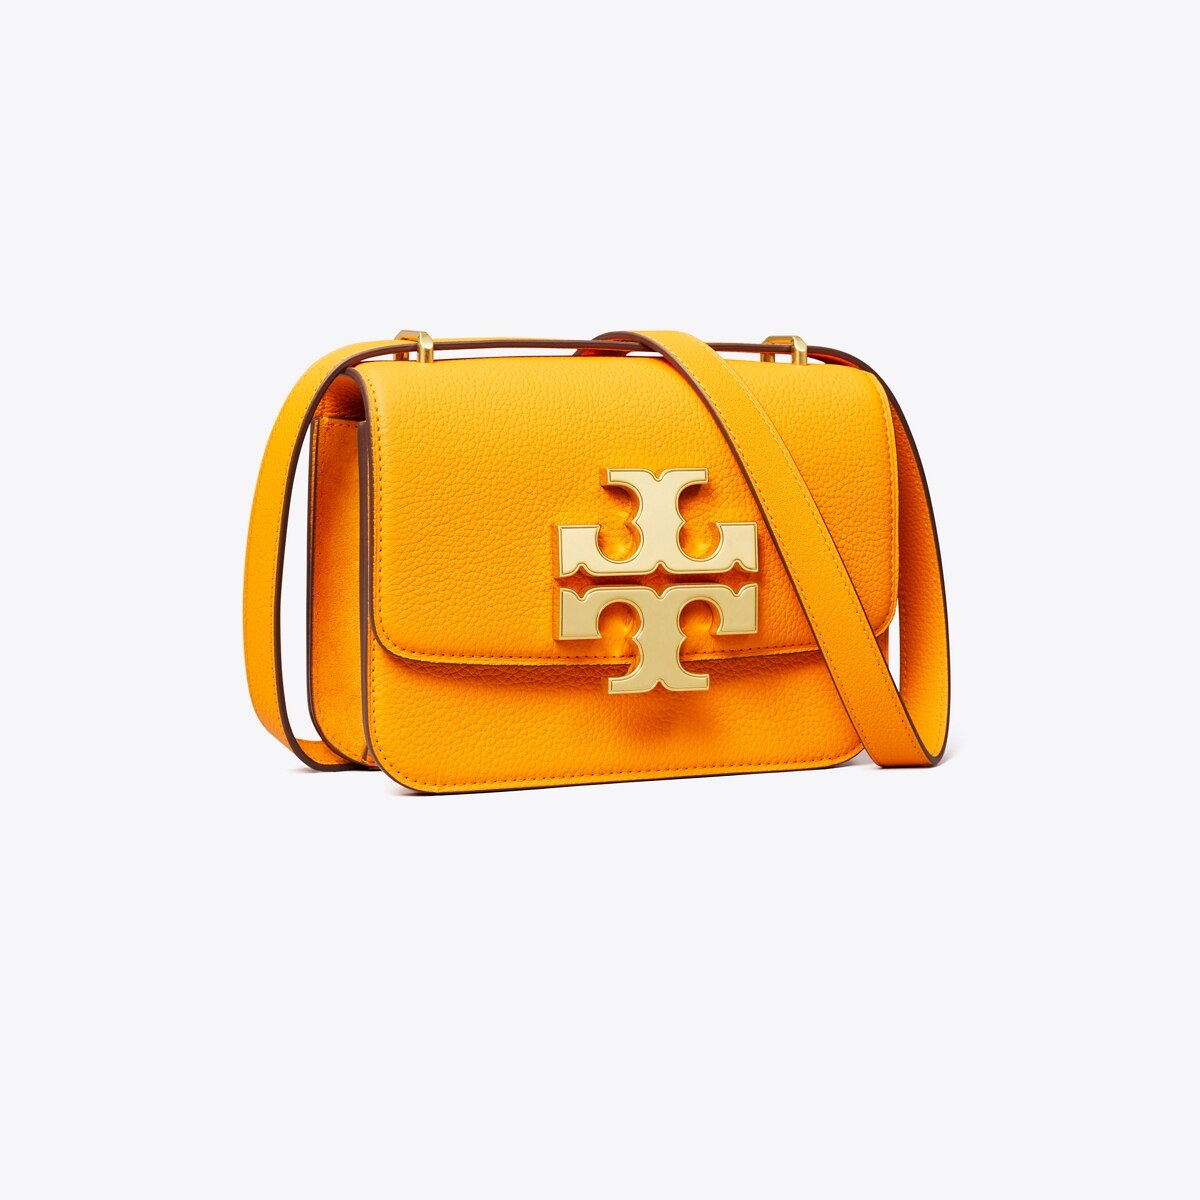 Tan TORY BURCH Kira Chevron Small Convertible Shoulder Bag (Devon Sand)  Handbags on COOLS